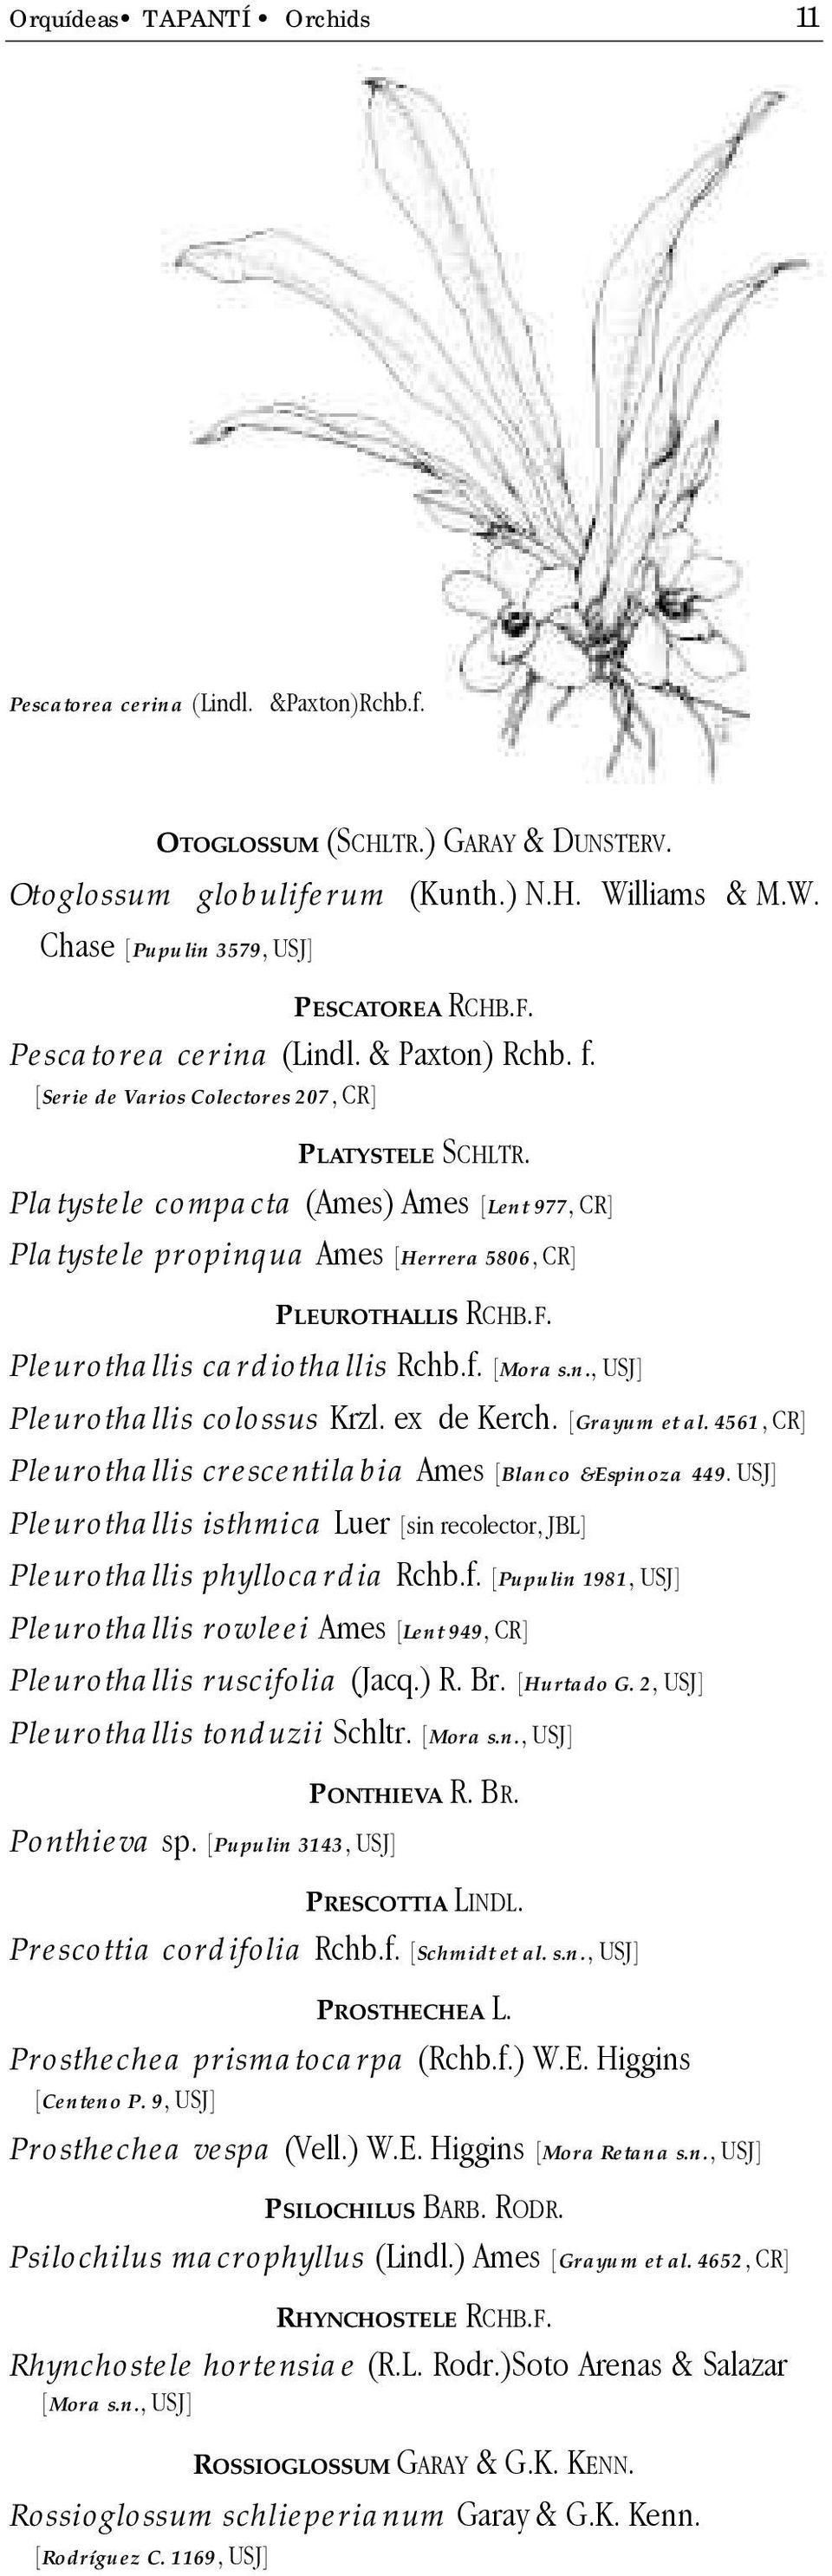 Platystele compacta (Ames) Ames [Lent 977, CR] Platystele propinqua Ames [Herrera 5806, CR] PLEUROTHALLIS RCHB.F. Pleurothallis cardiothallis Rchb.f. [Mora s.n., USJ] Pleurothallis colossus Krzl.